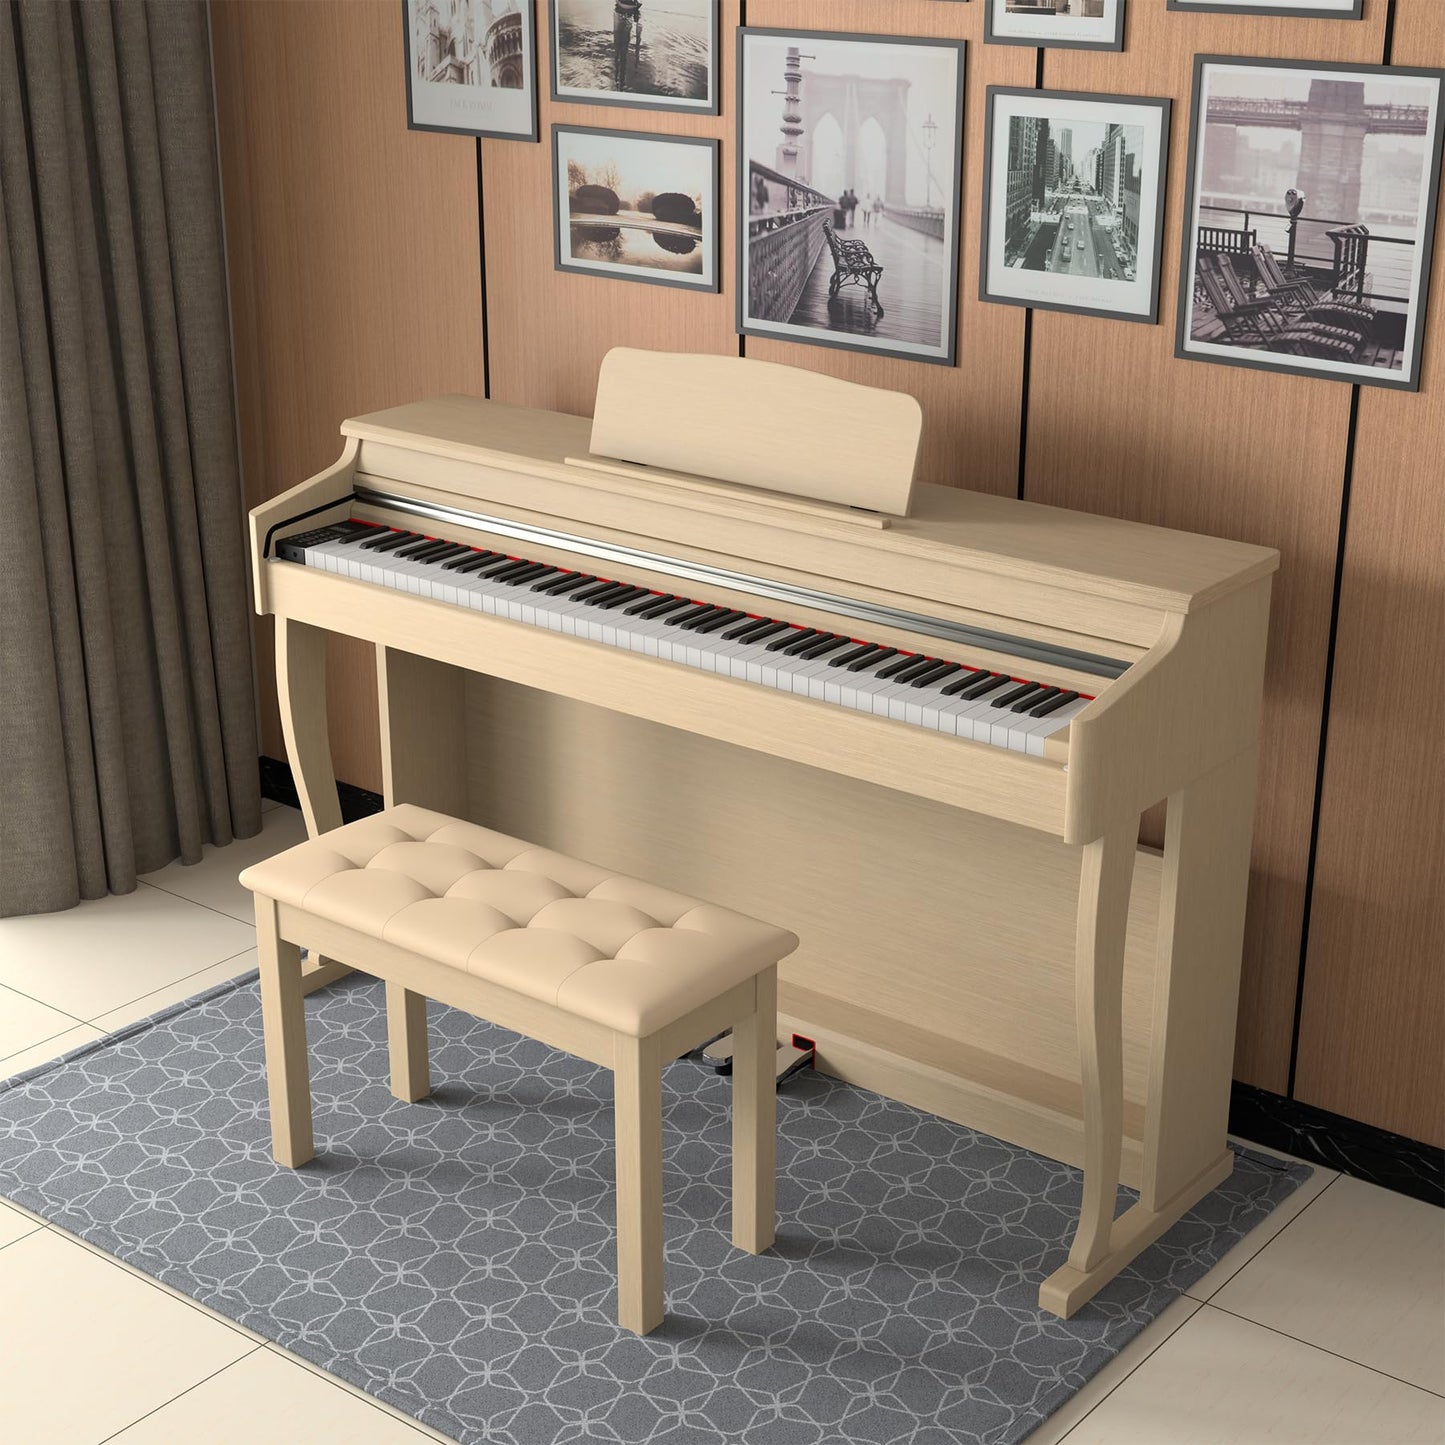 ZHRUNS Duet Piano Bench Wooden Keyboard Bench with Storage, Wooden Piano Keyboard Bench Long, Piano Stool Beige